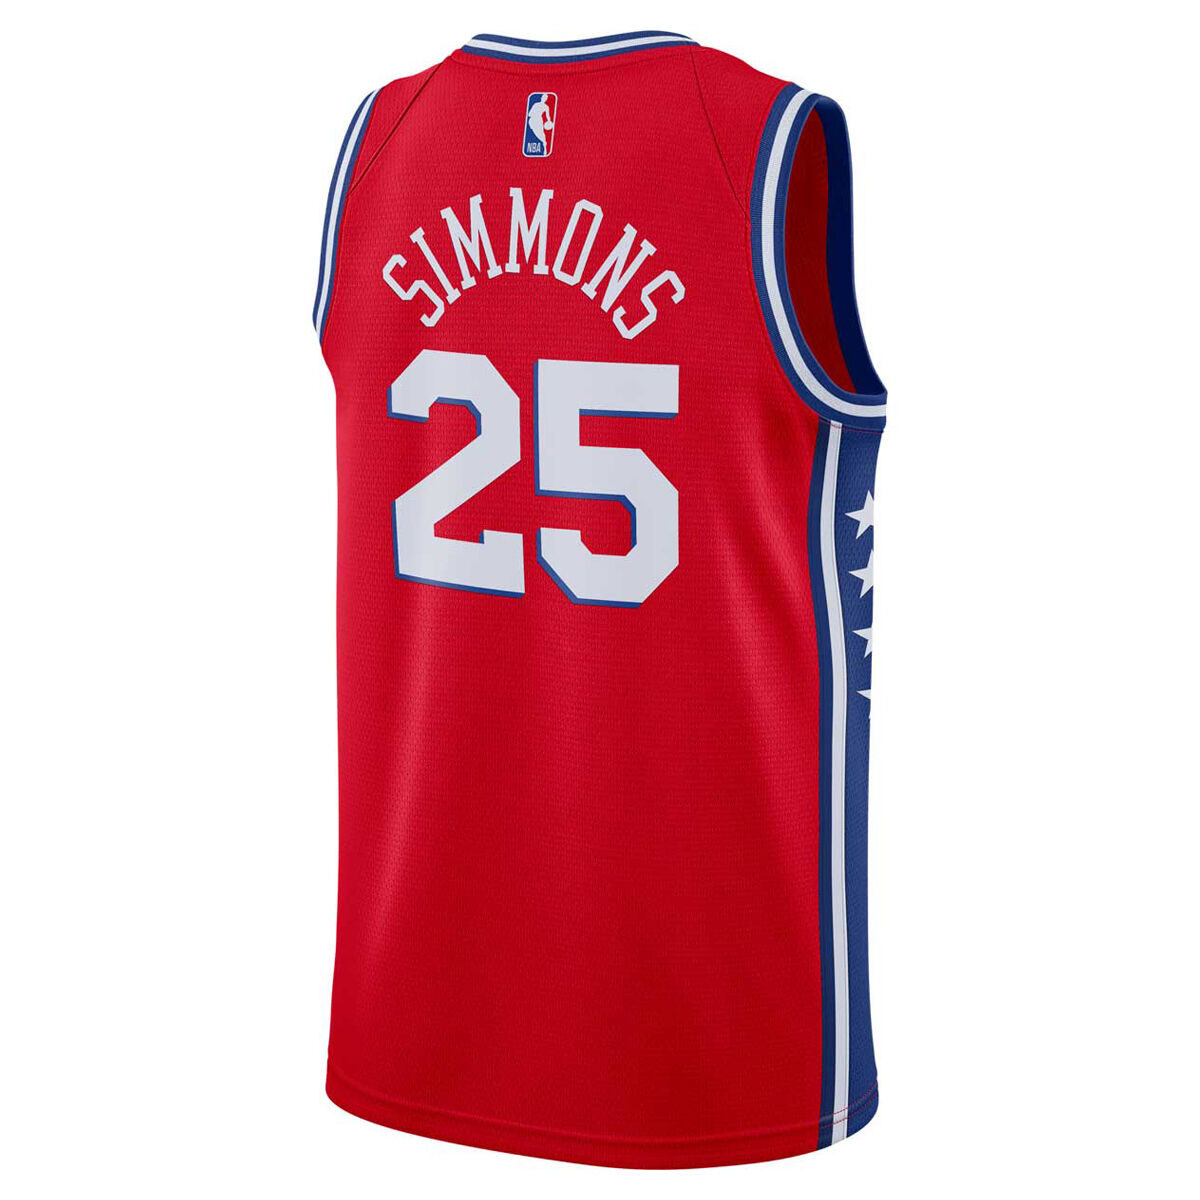 70% OFF the Nike NBA 76ers Icon Ben Simmons Swingman Jersey